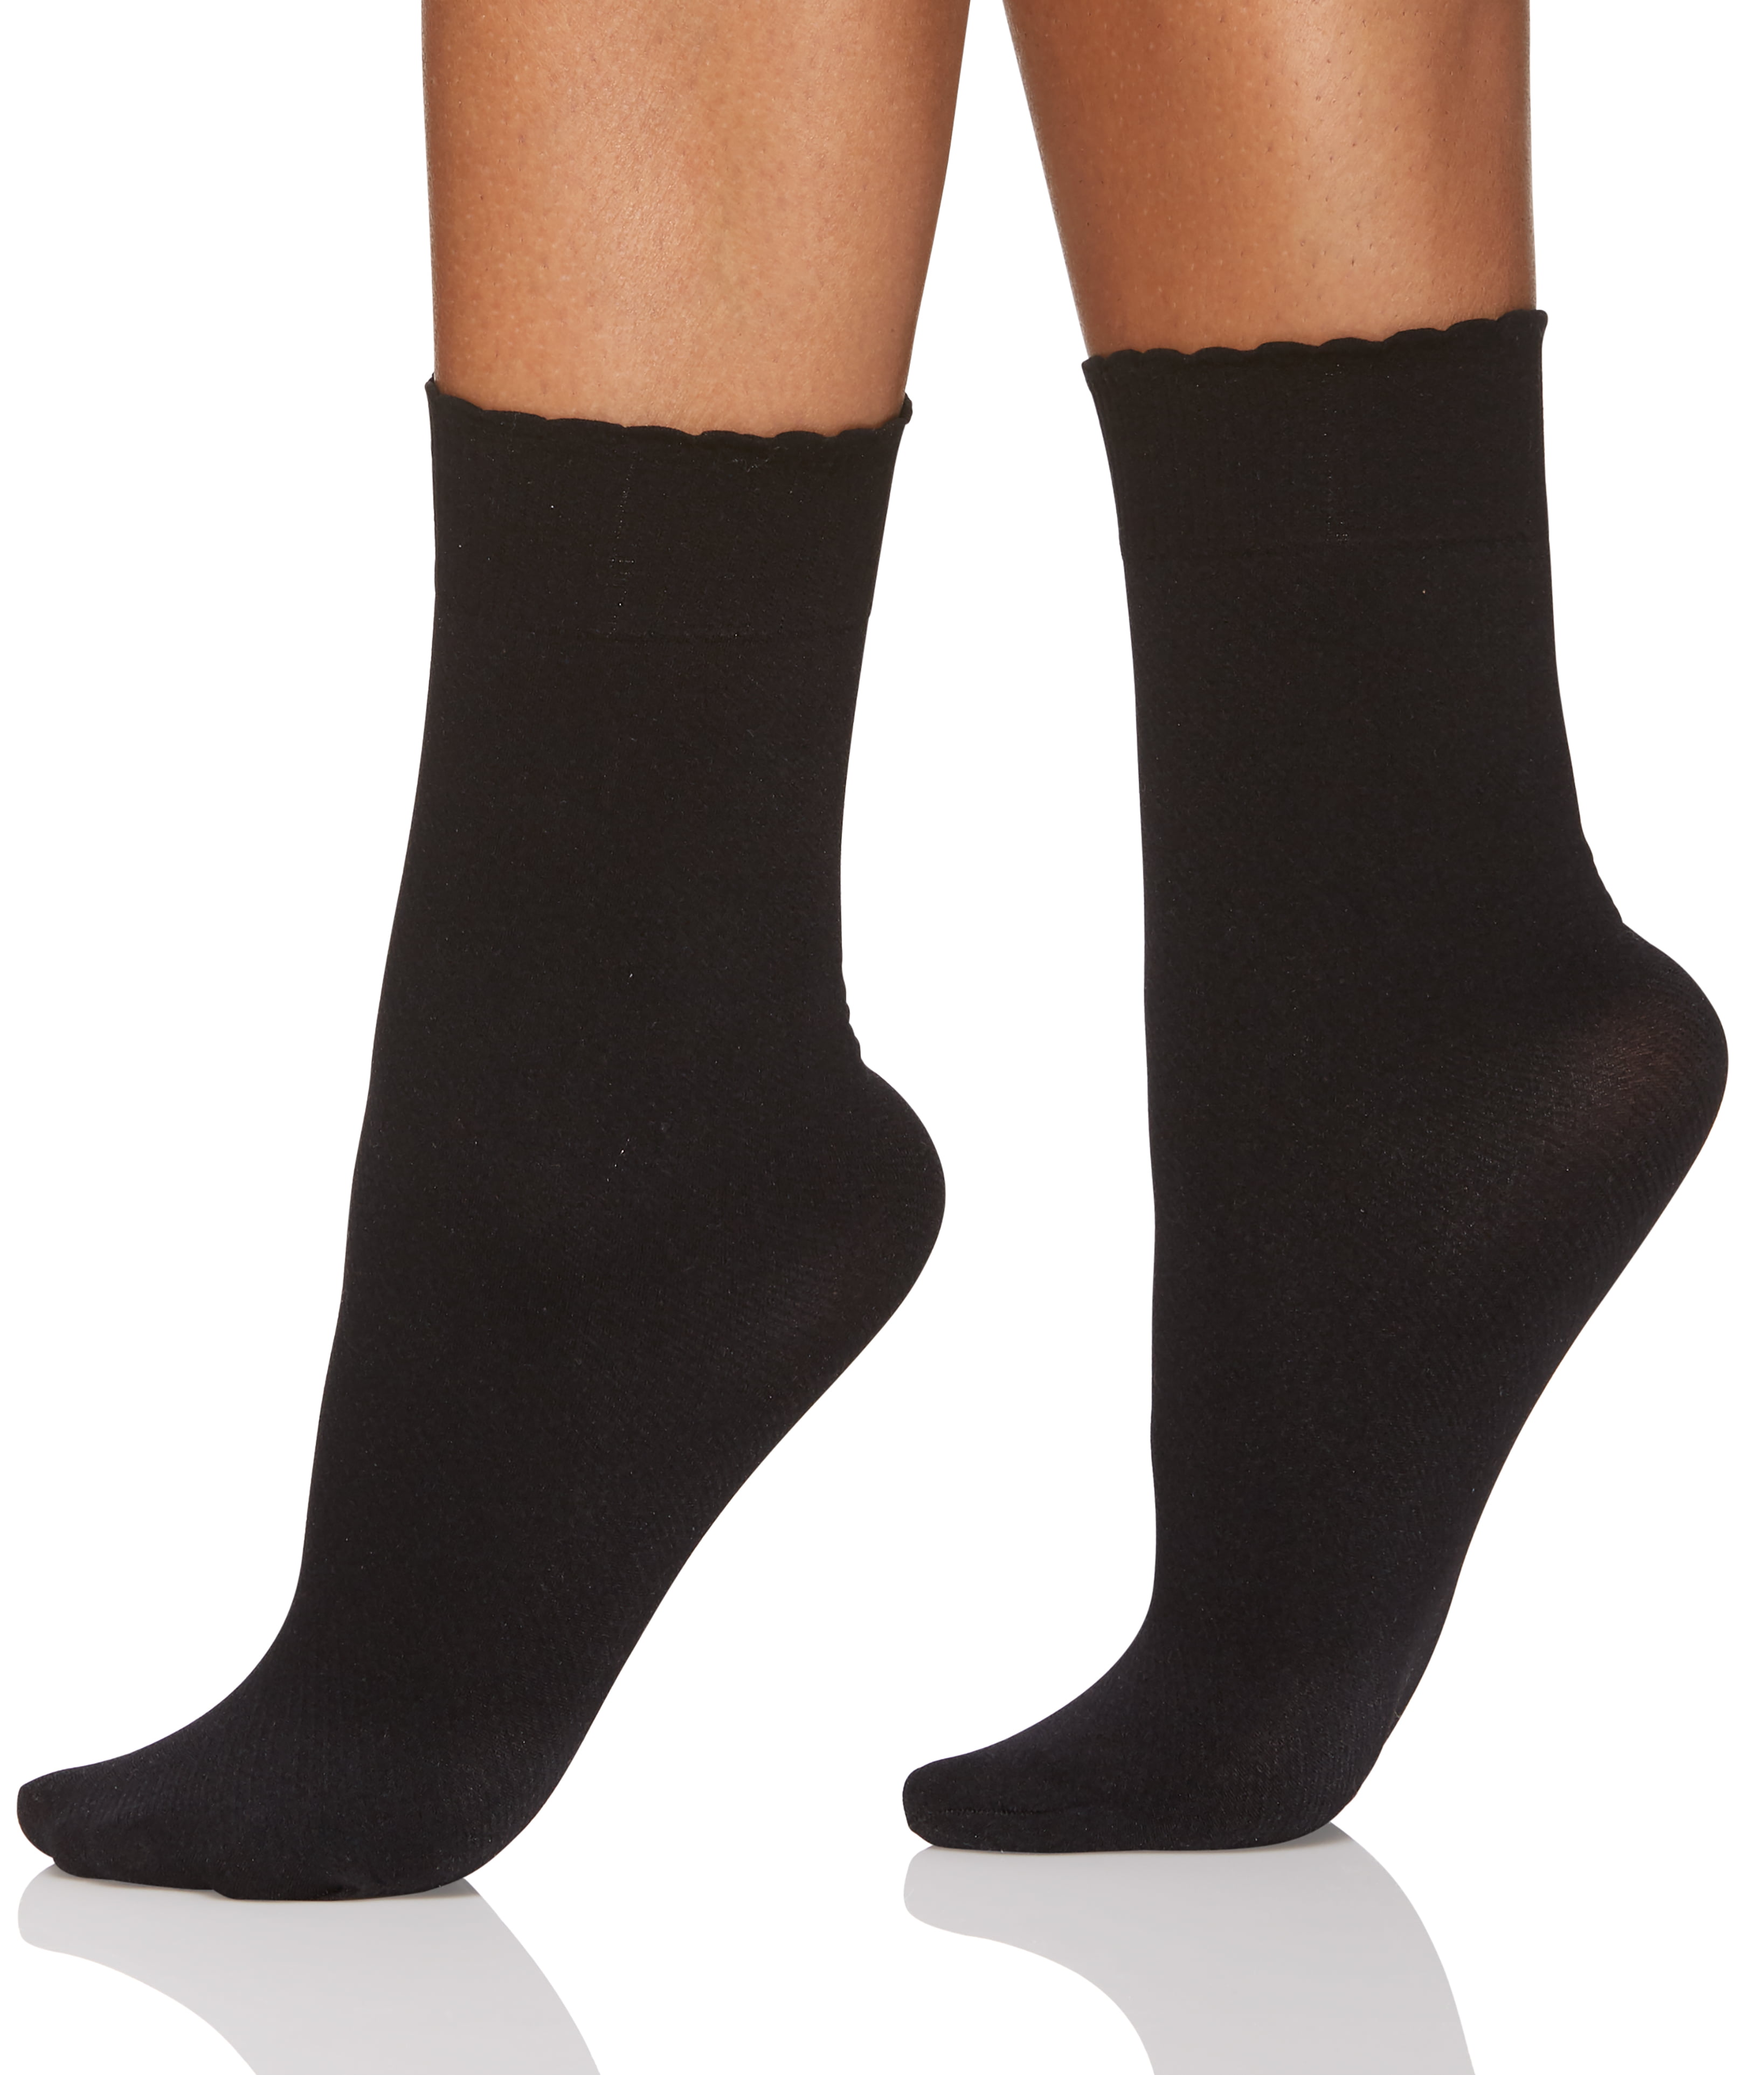 Berkshire Cozy Hose Plus Size Comfy Cuff Trouser Socks 